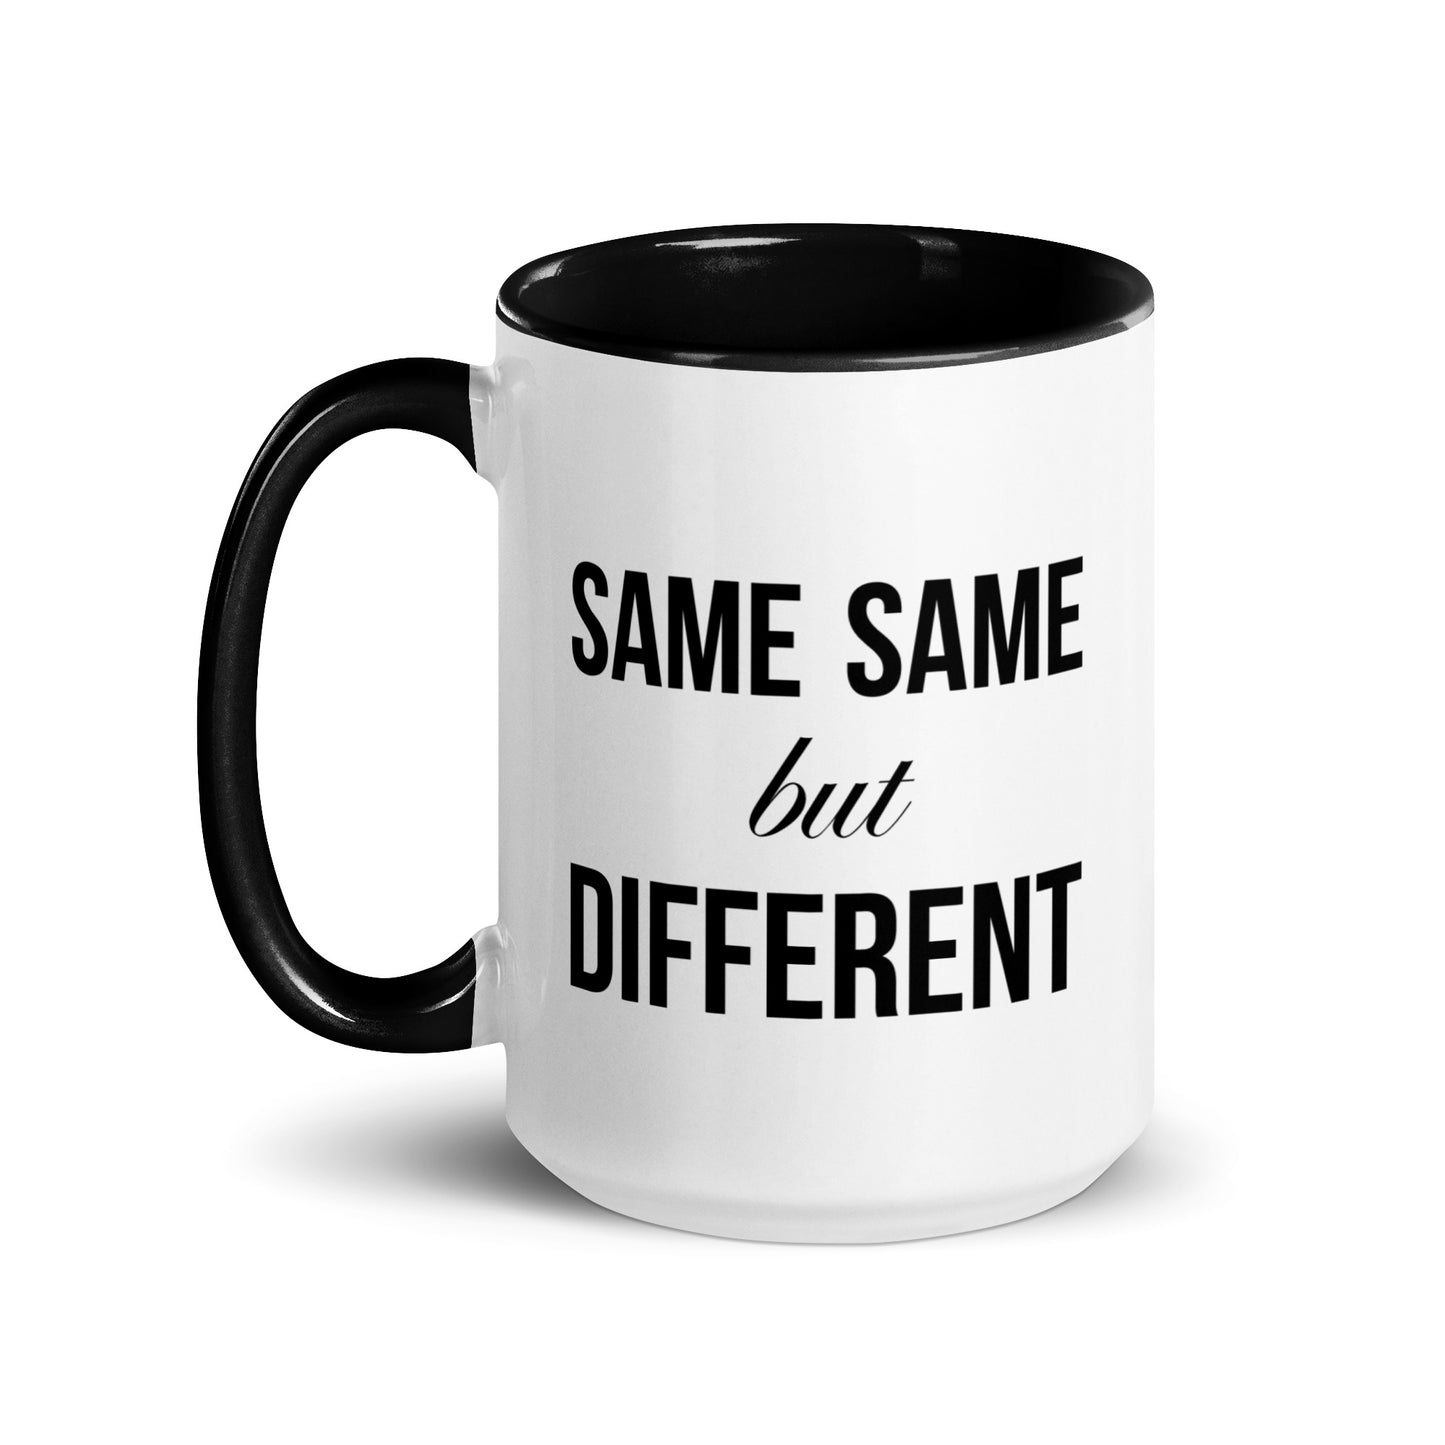 Same Same but Different Mug with Color Inside